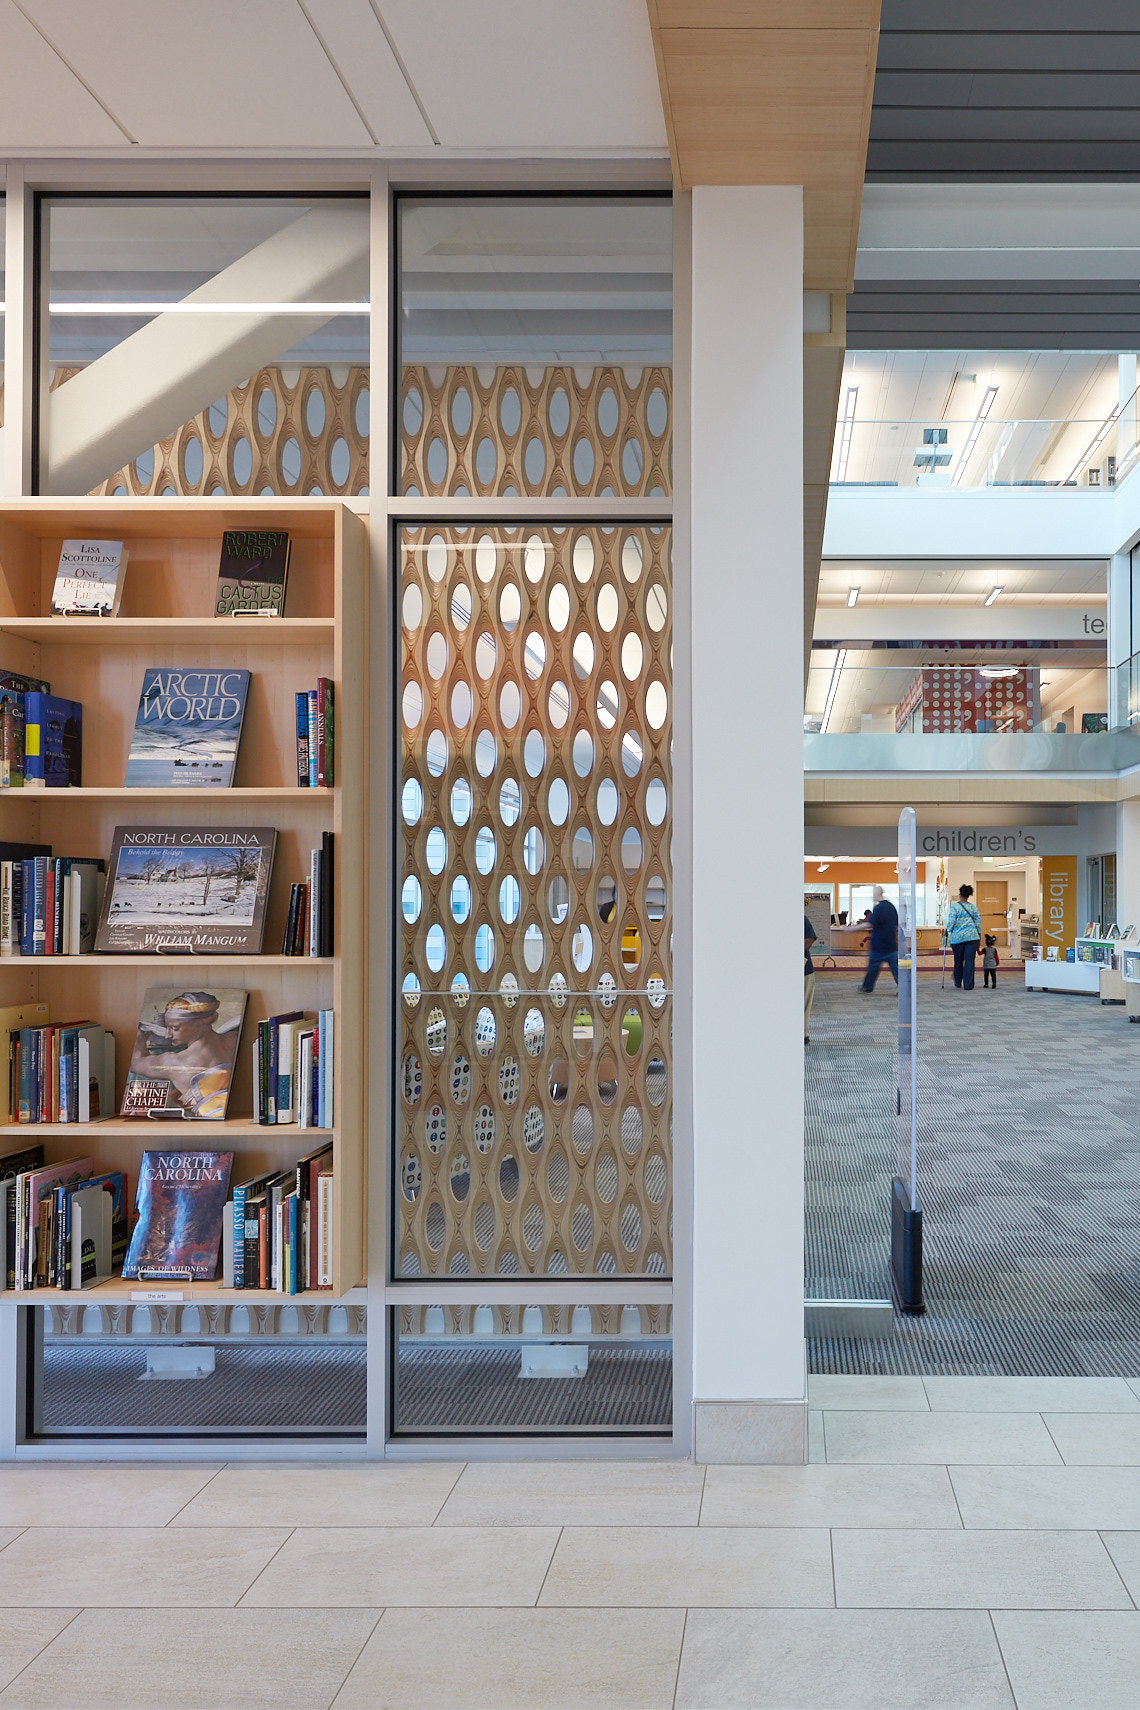 FCCL | Forsyth County Central Library, Winston-Salem NC - RATIO Architects, Raleigh NC